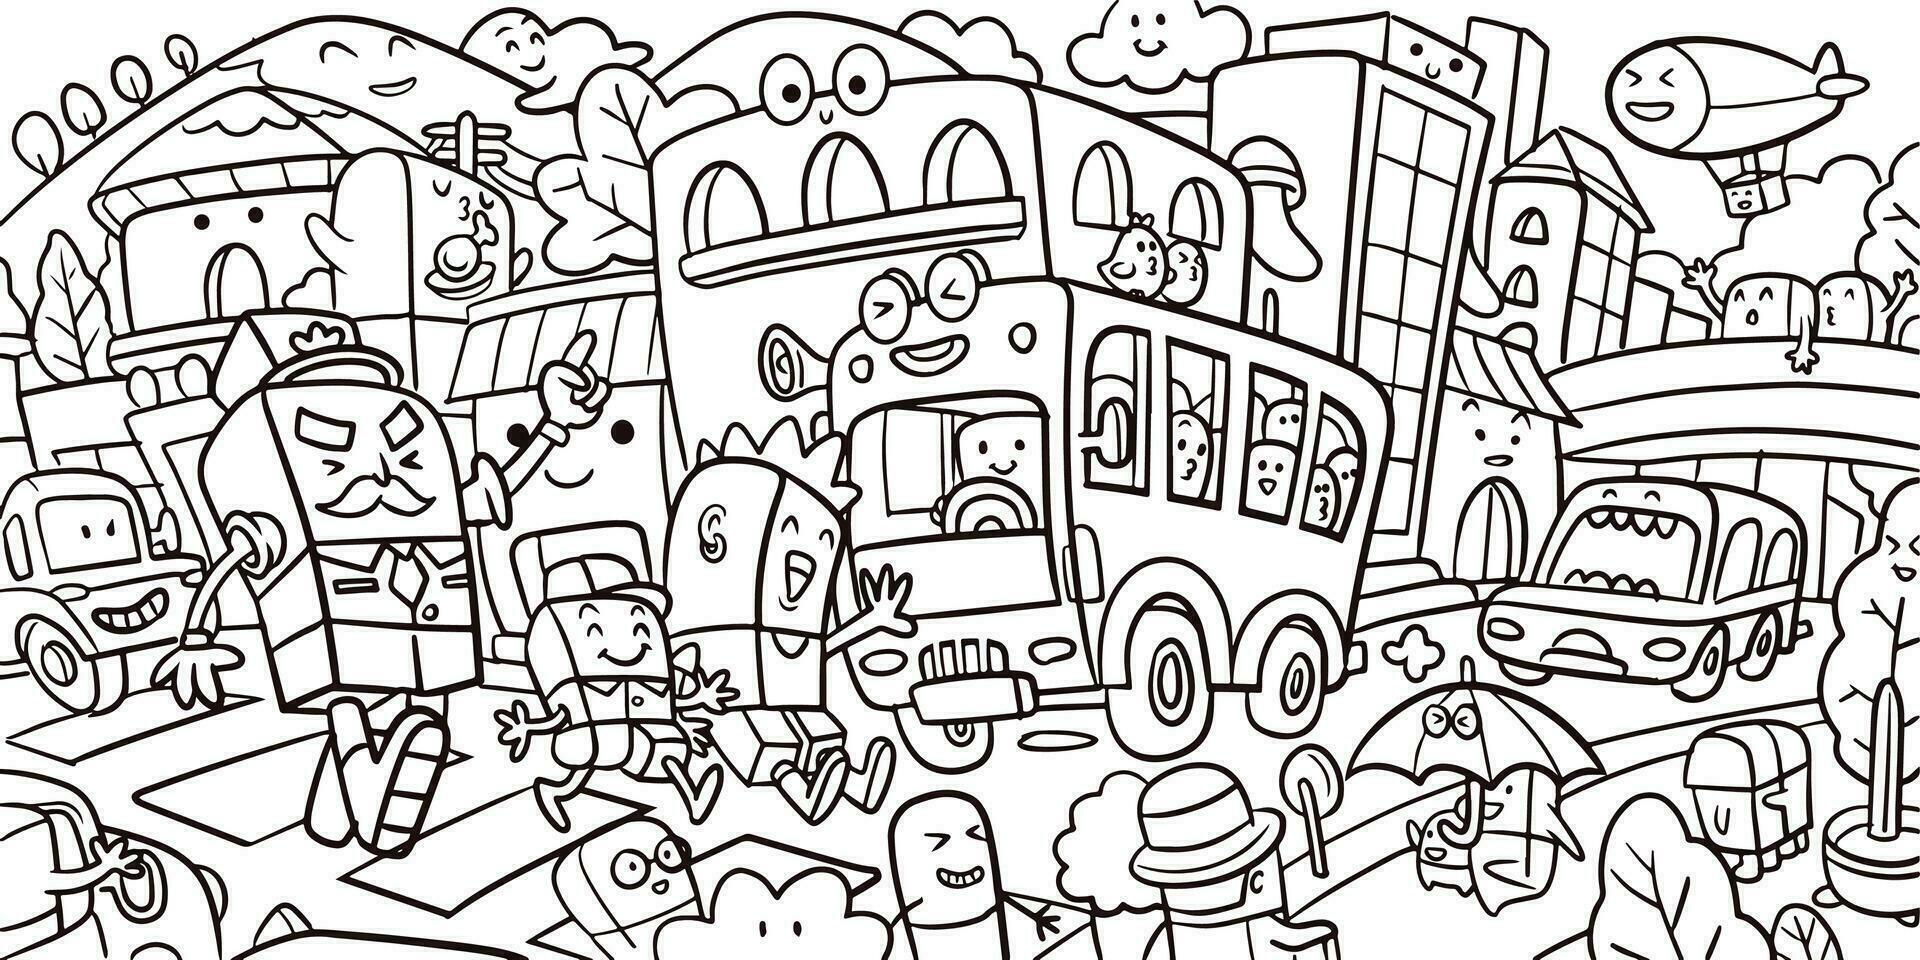 Urban theme doodles black and white doodles cute fun doodles vector